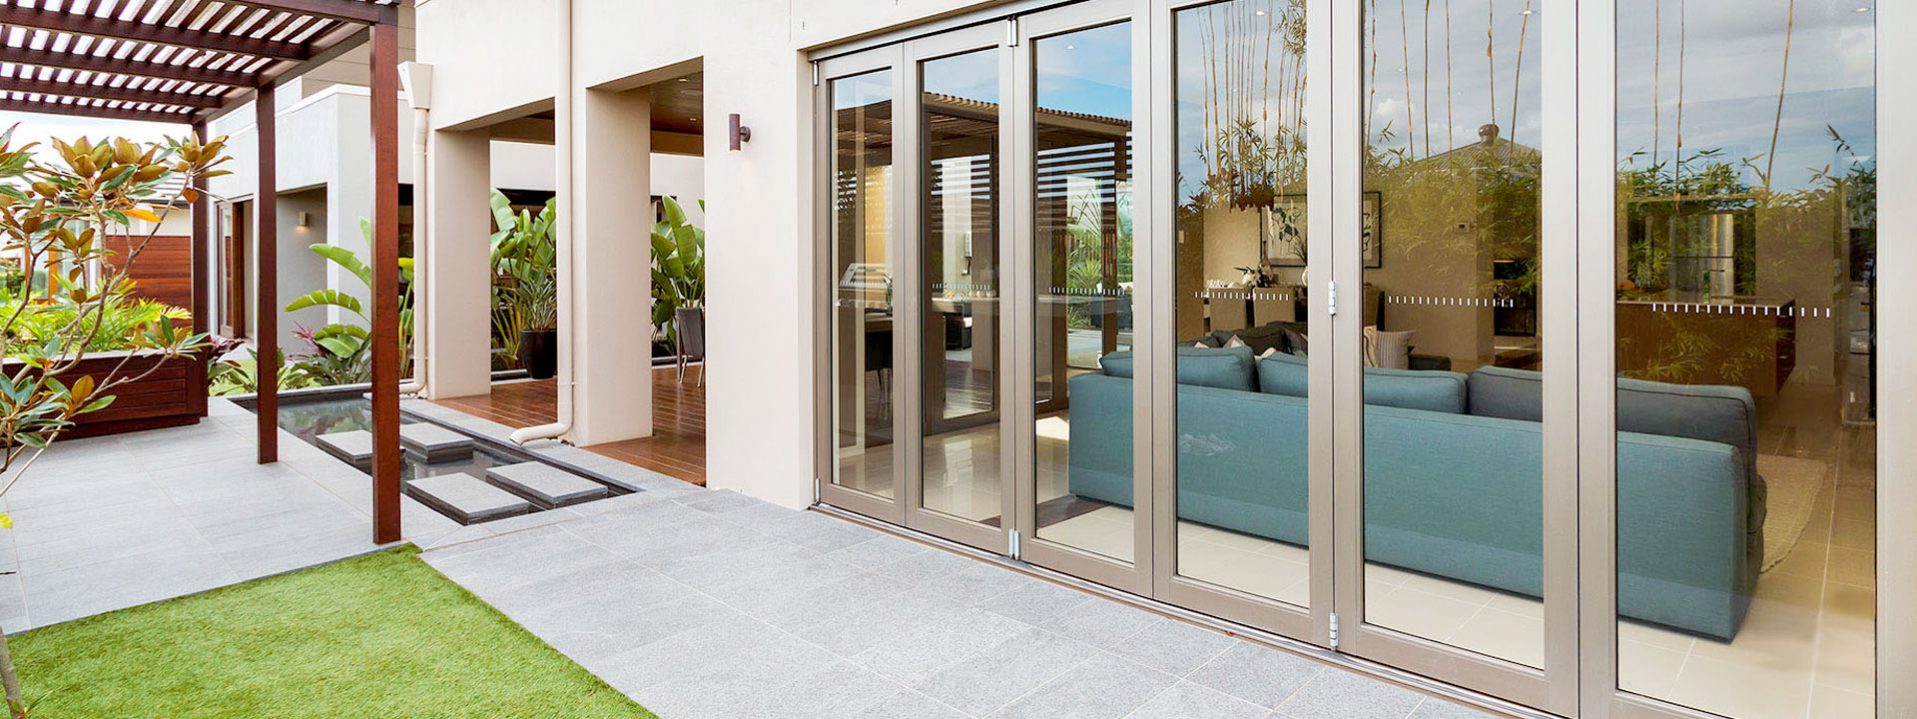 Aluminium bifold security doors located in a Perth backyard.